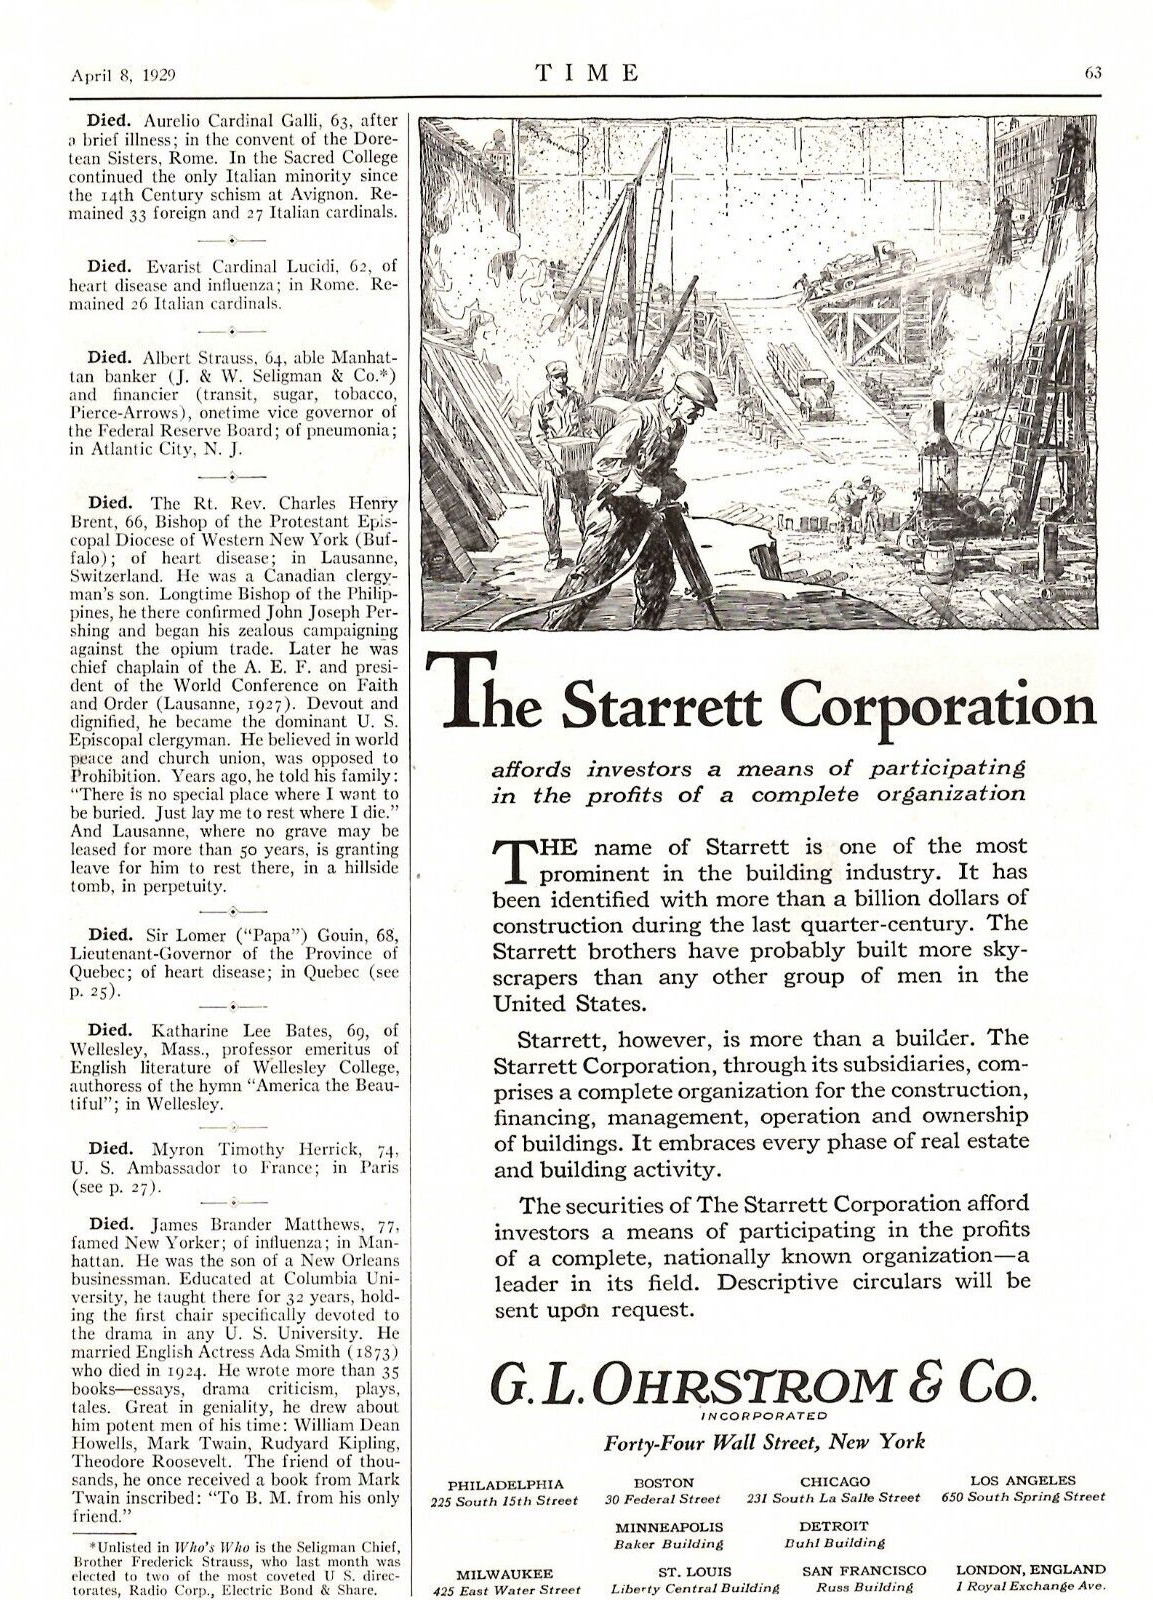 1929 Print Ad G.L. Ohrstrom The Starret Corporation Affords Investors Illus